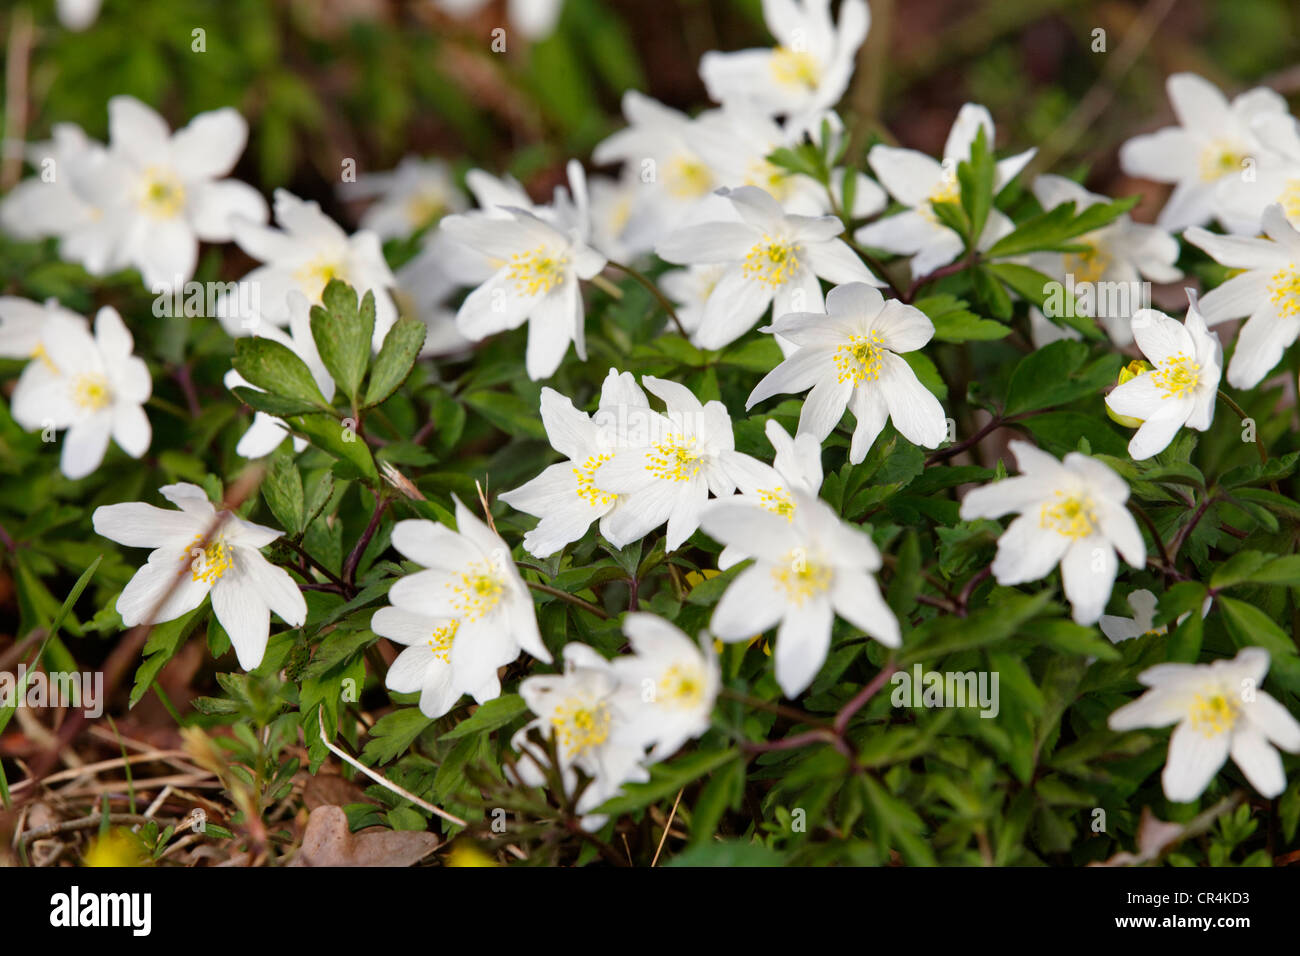 Wood anemone, Windflower, Thimbleweed or Smell fox (Anemone nemorosa), Allier, France, Europe Stock Photo